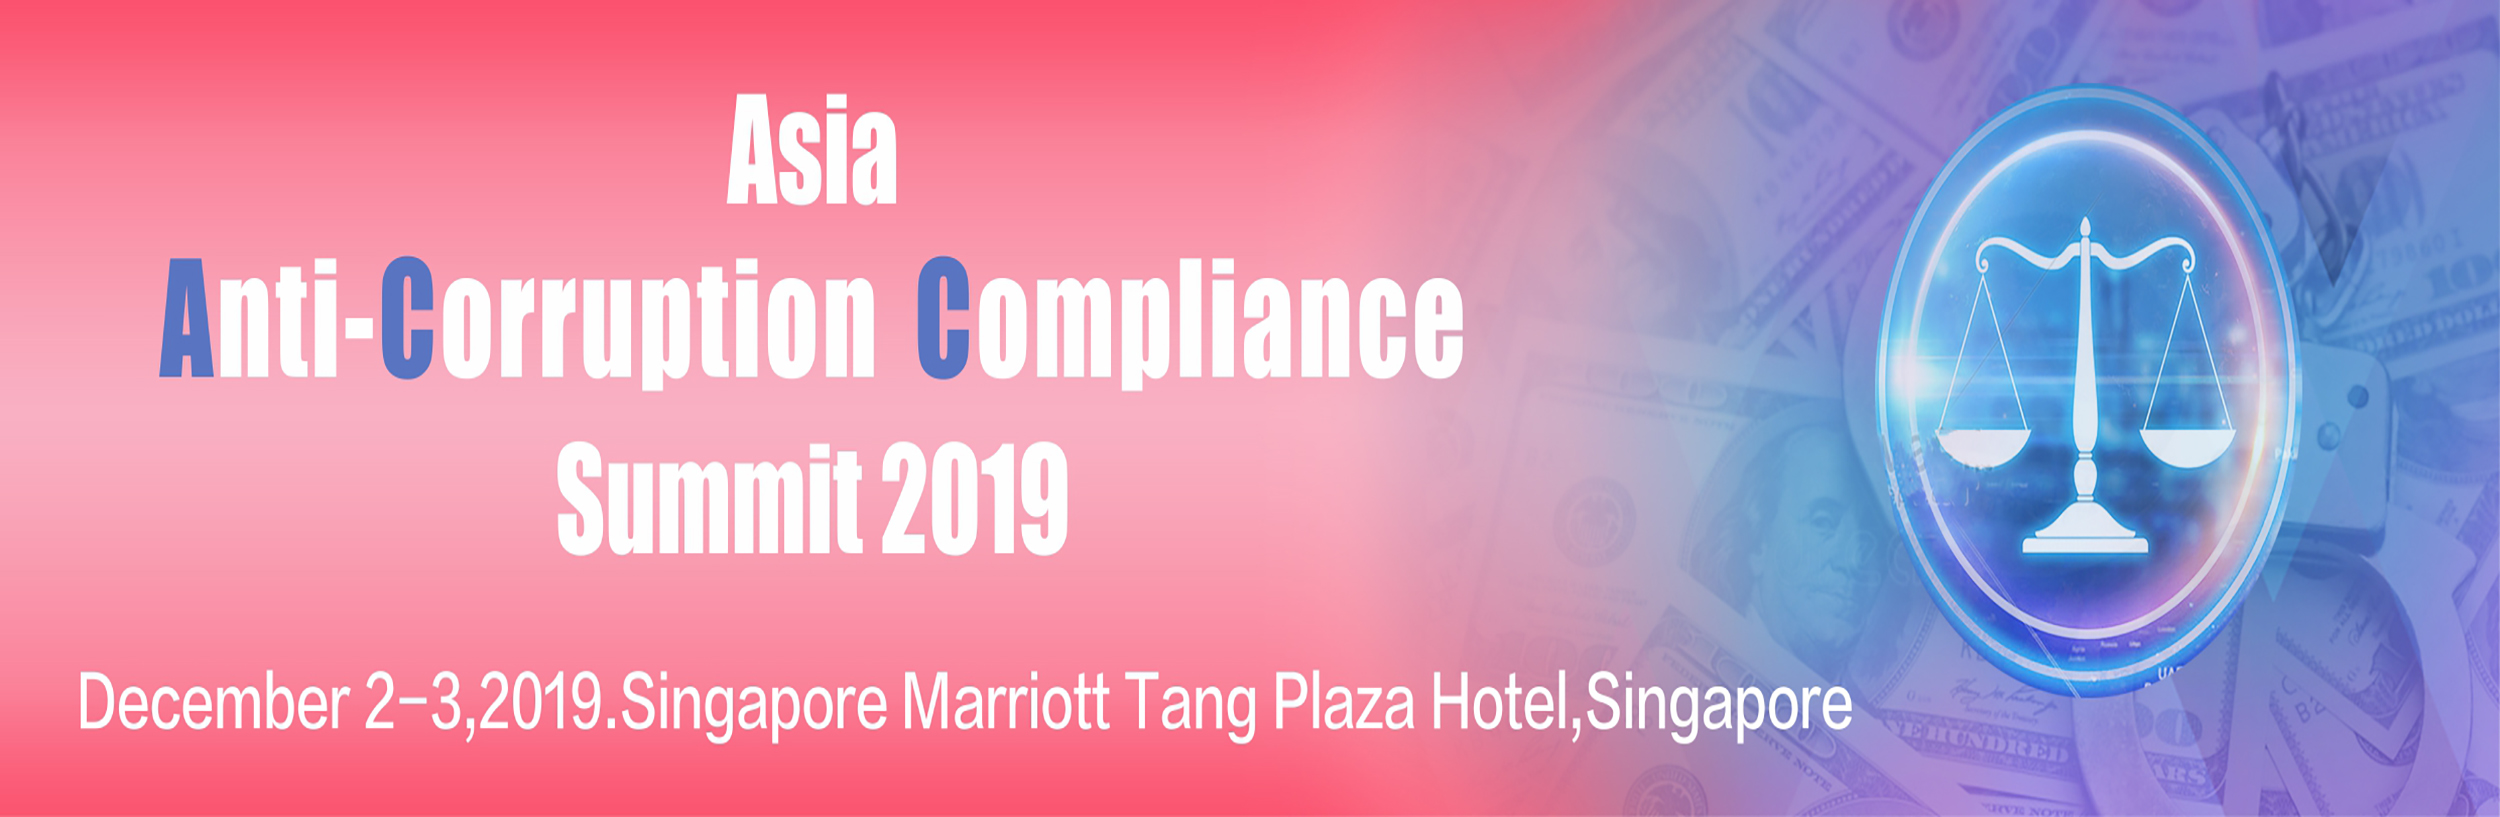 Asia Anti-Corruption Compliance Summit 2019 